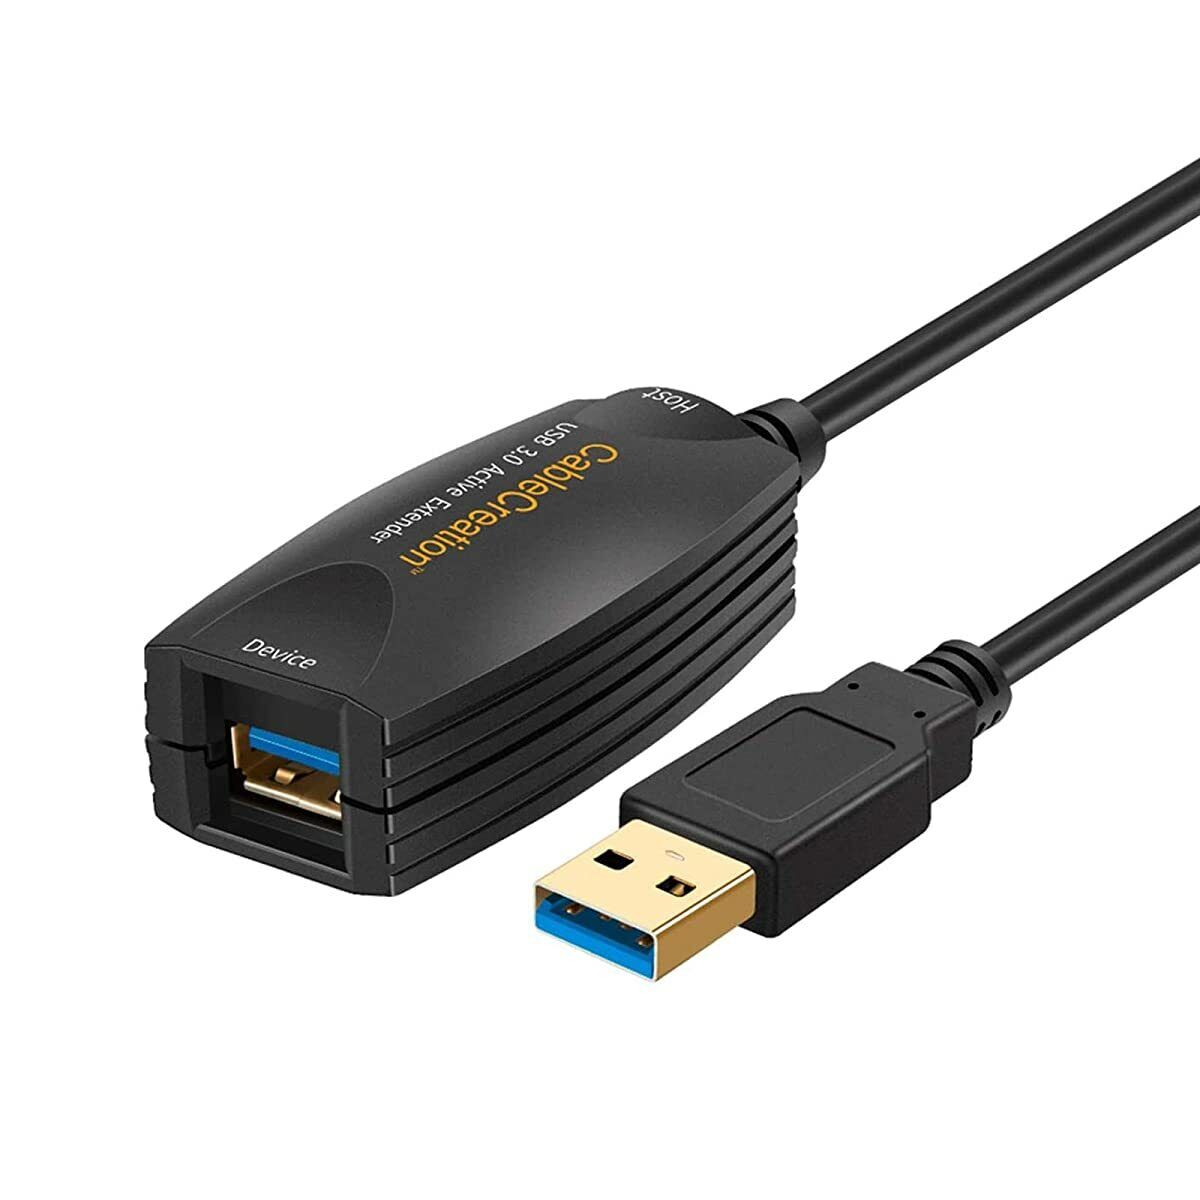 USB 3.0 extension cable, CableCreation (Long 5M) USB 3.0 extension cable super